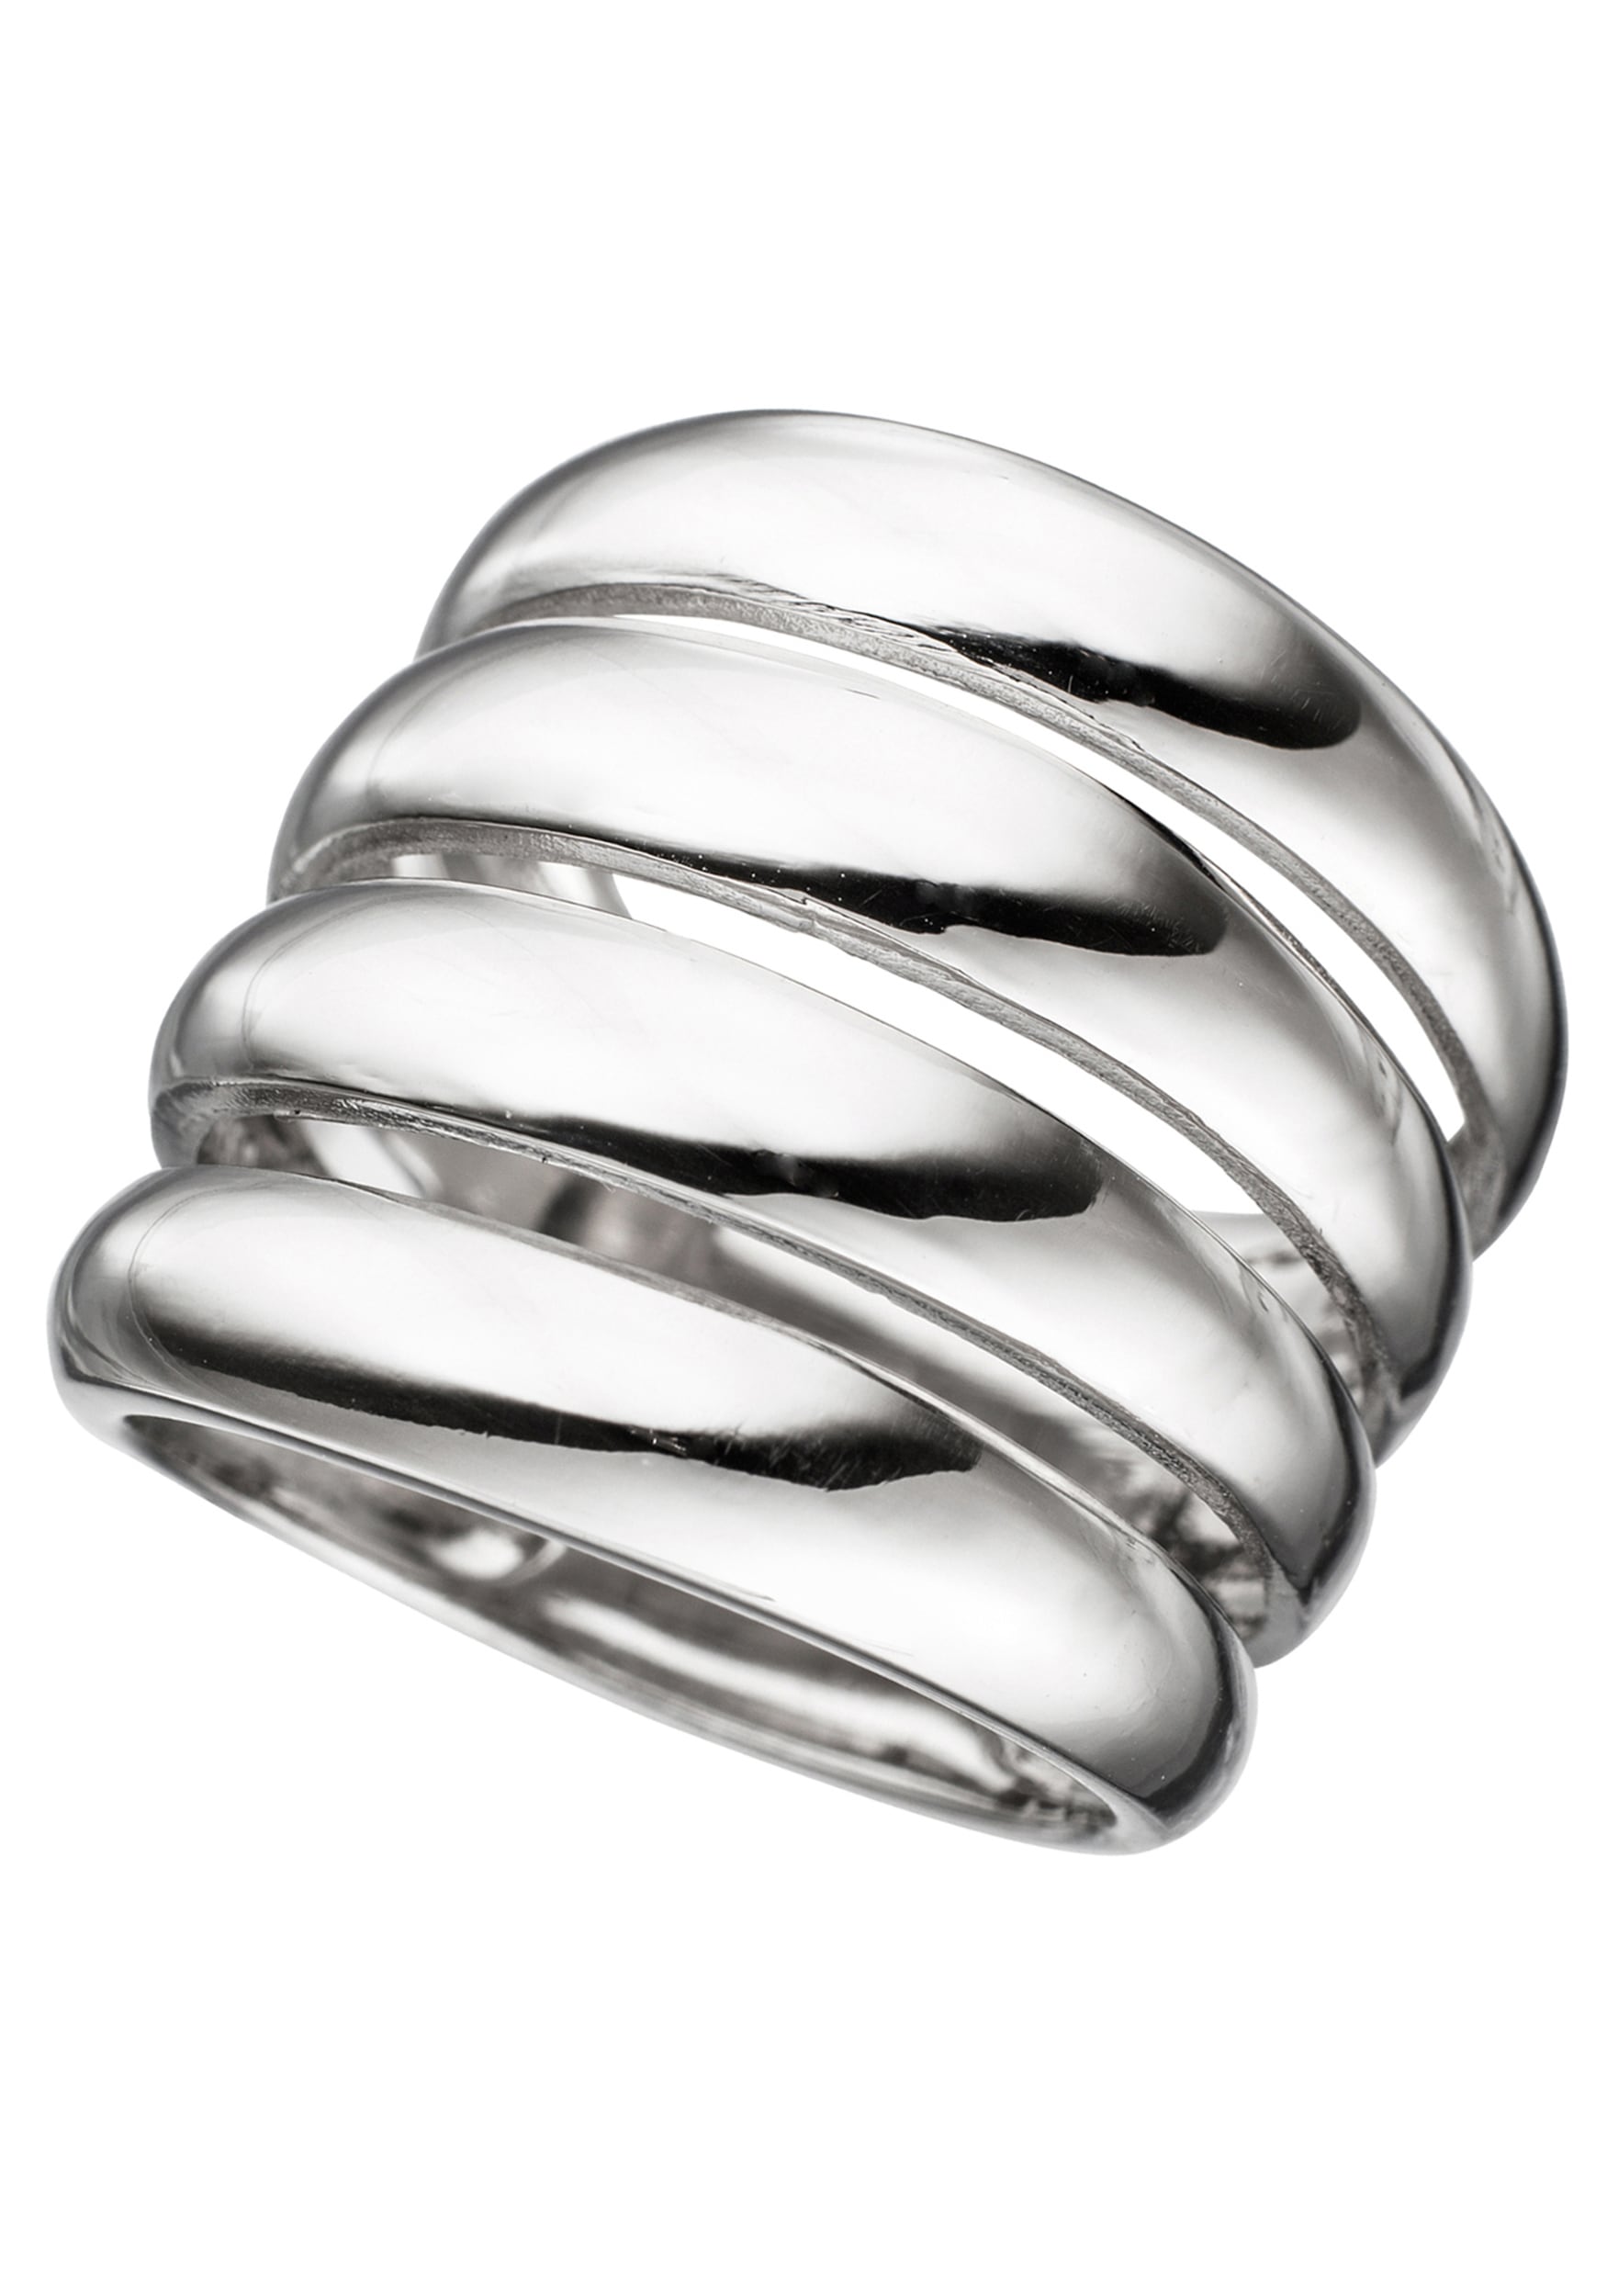 JOBO Silberring »Breiter Mehrfach-Ring«, 925 Silber rhodiniert